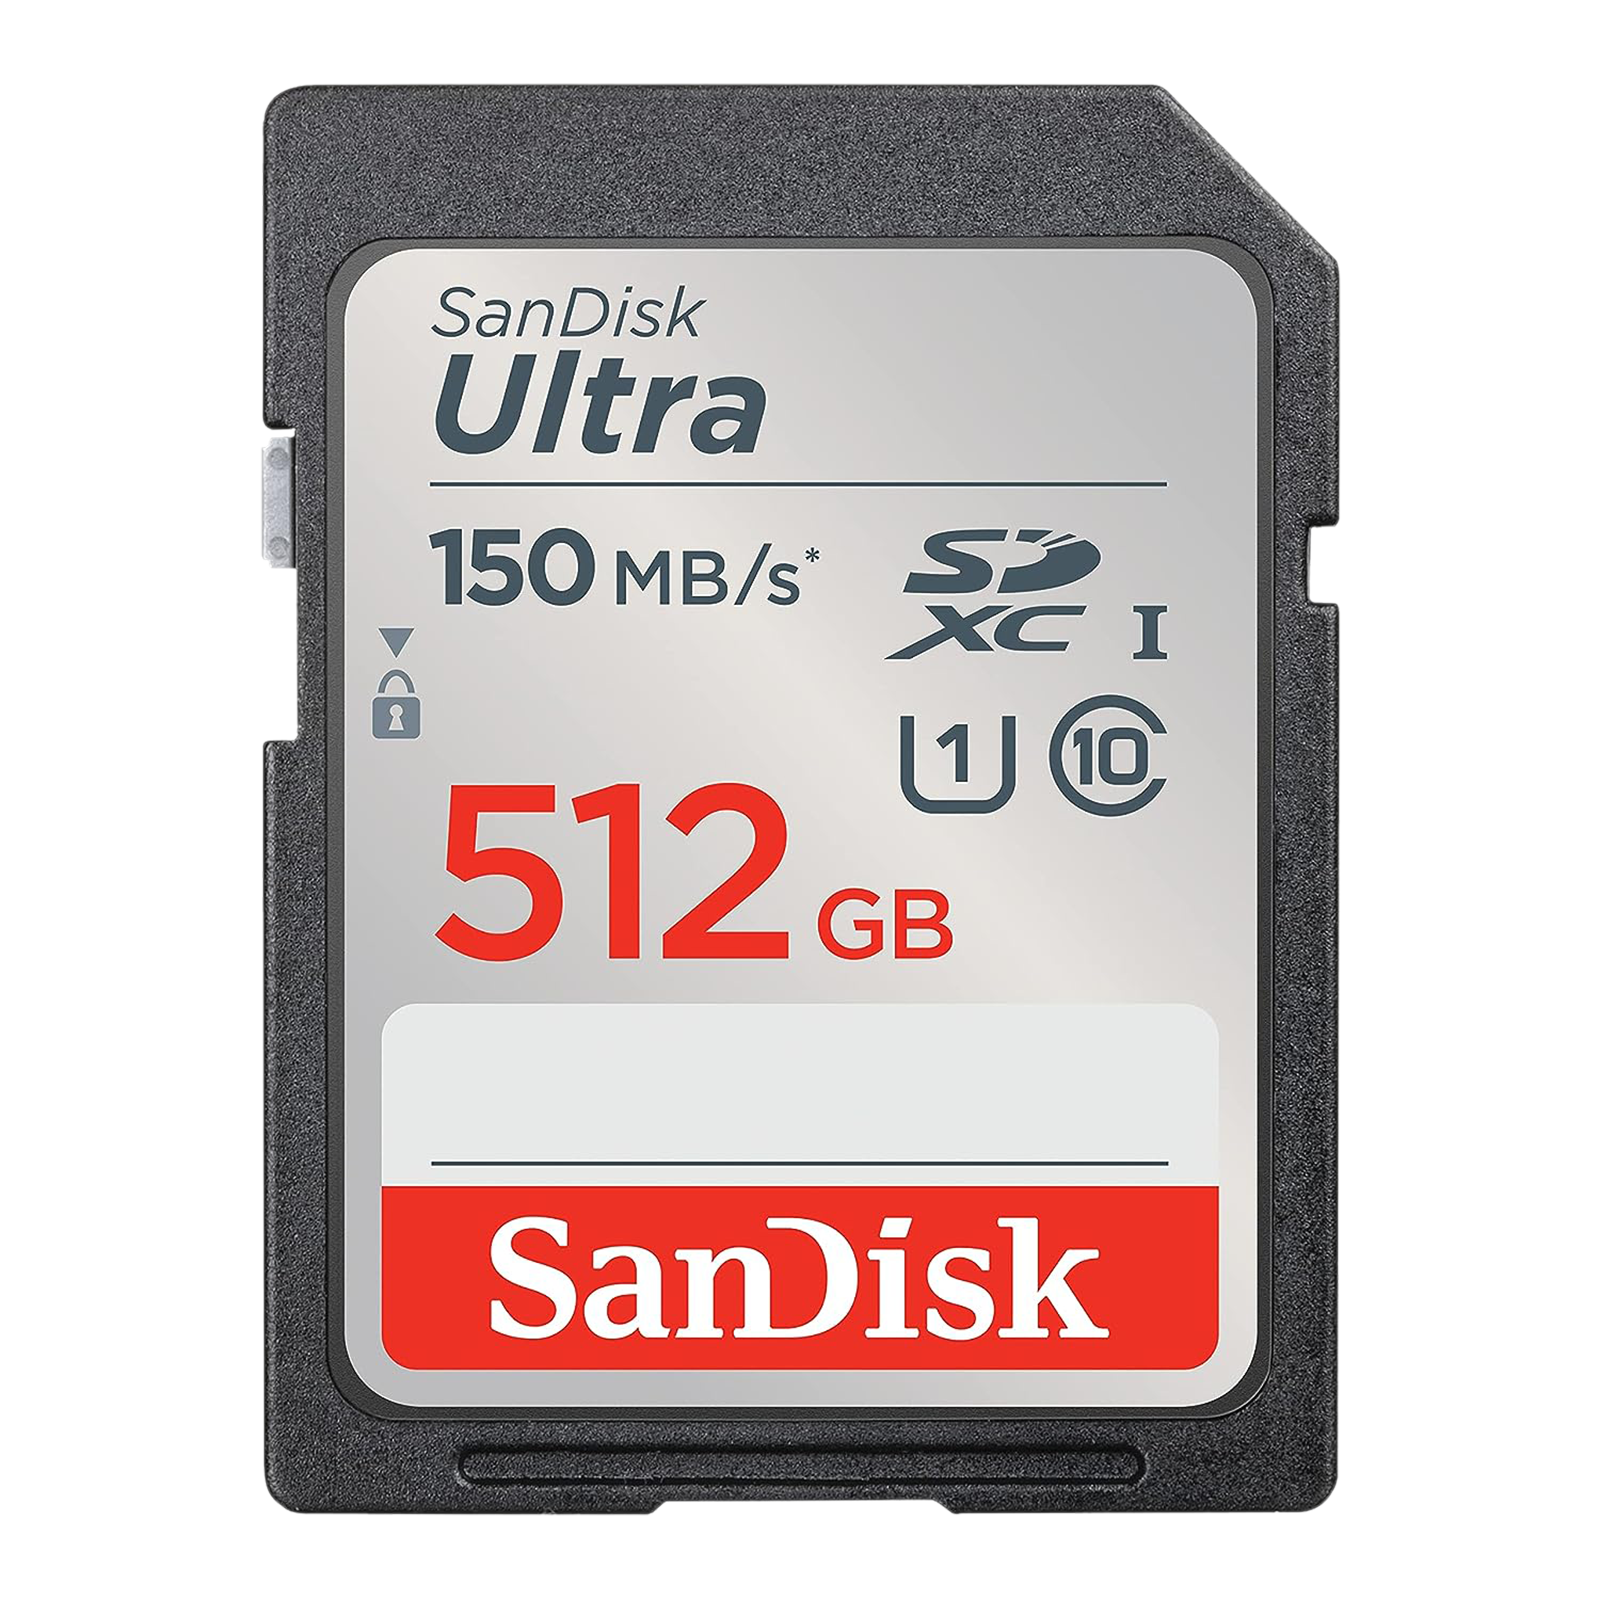 SanDisk Ultra SDXC 512GB Class 10 150MB/s Memory Card